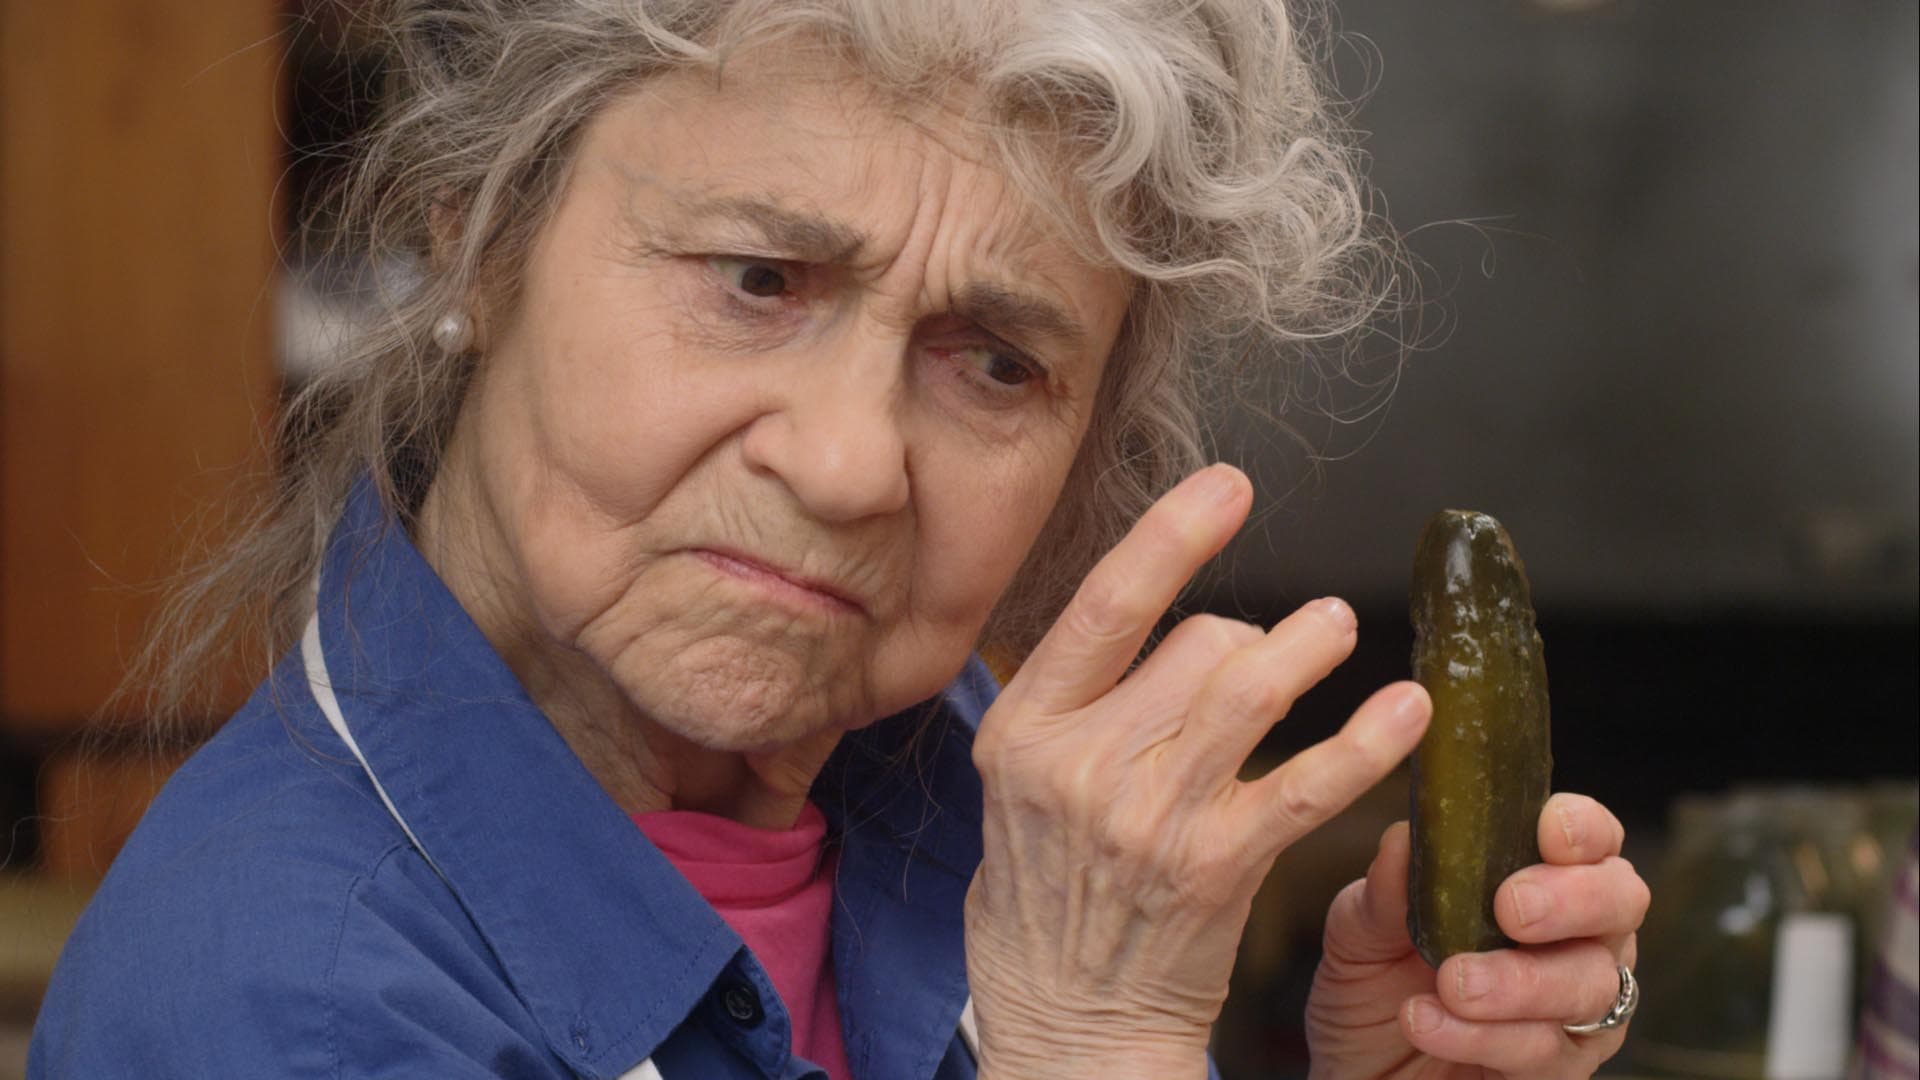 Kadr z filmu "Przepis na kiszone ogórki". Babcia, jedna z bohaterek filmu, trzyma jednego ogórka.